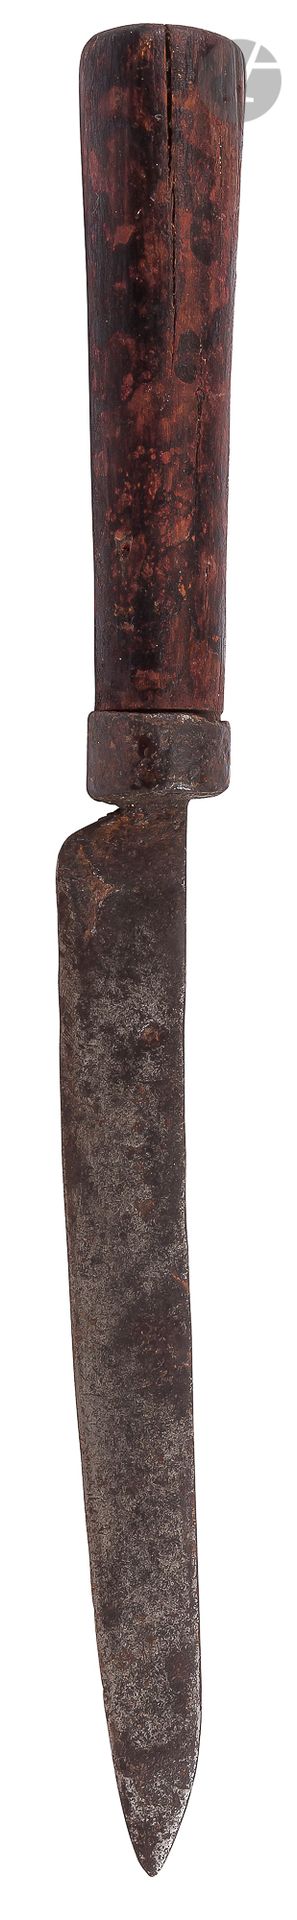 Null 刀子。

刀片与背面。铁套筒，圆木柄。

十七世纪的刀片，后来重新组装的。

挖掘的碎片。长度：30,5 cm